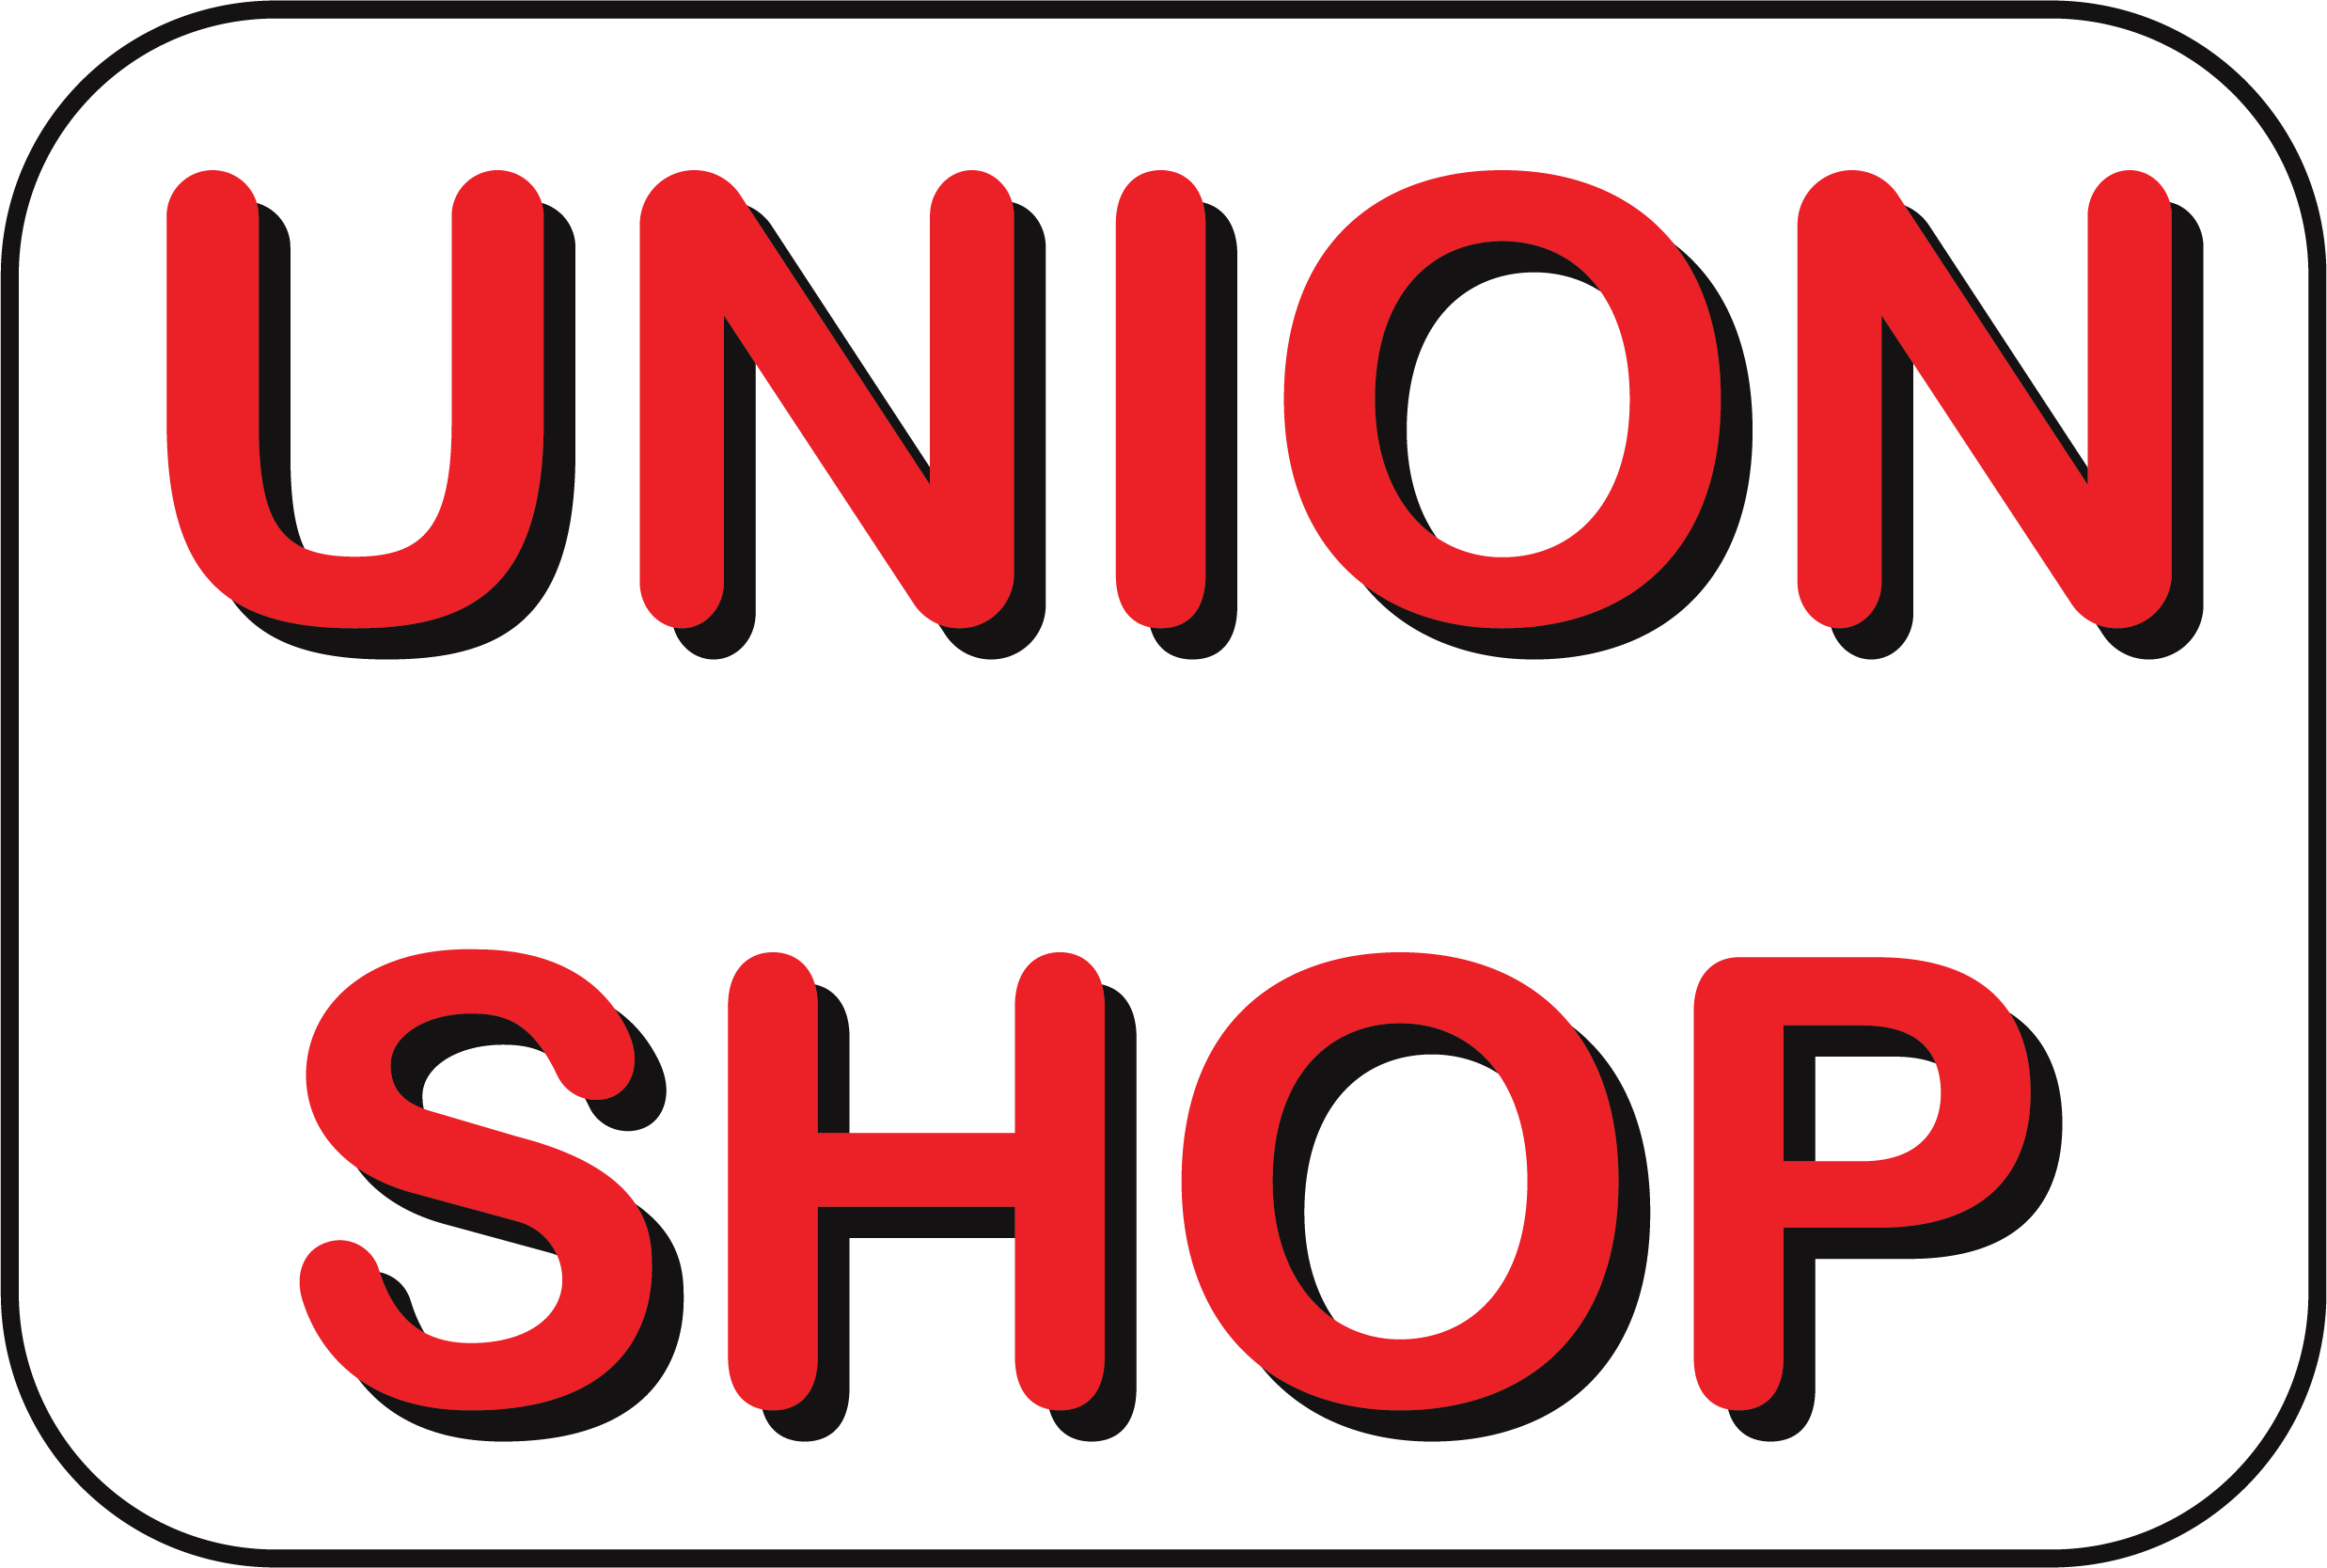 What is a union shop?